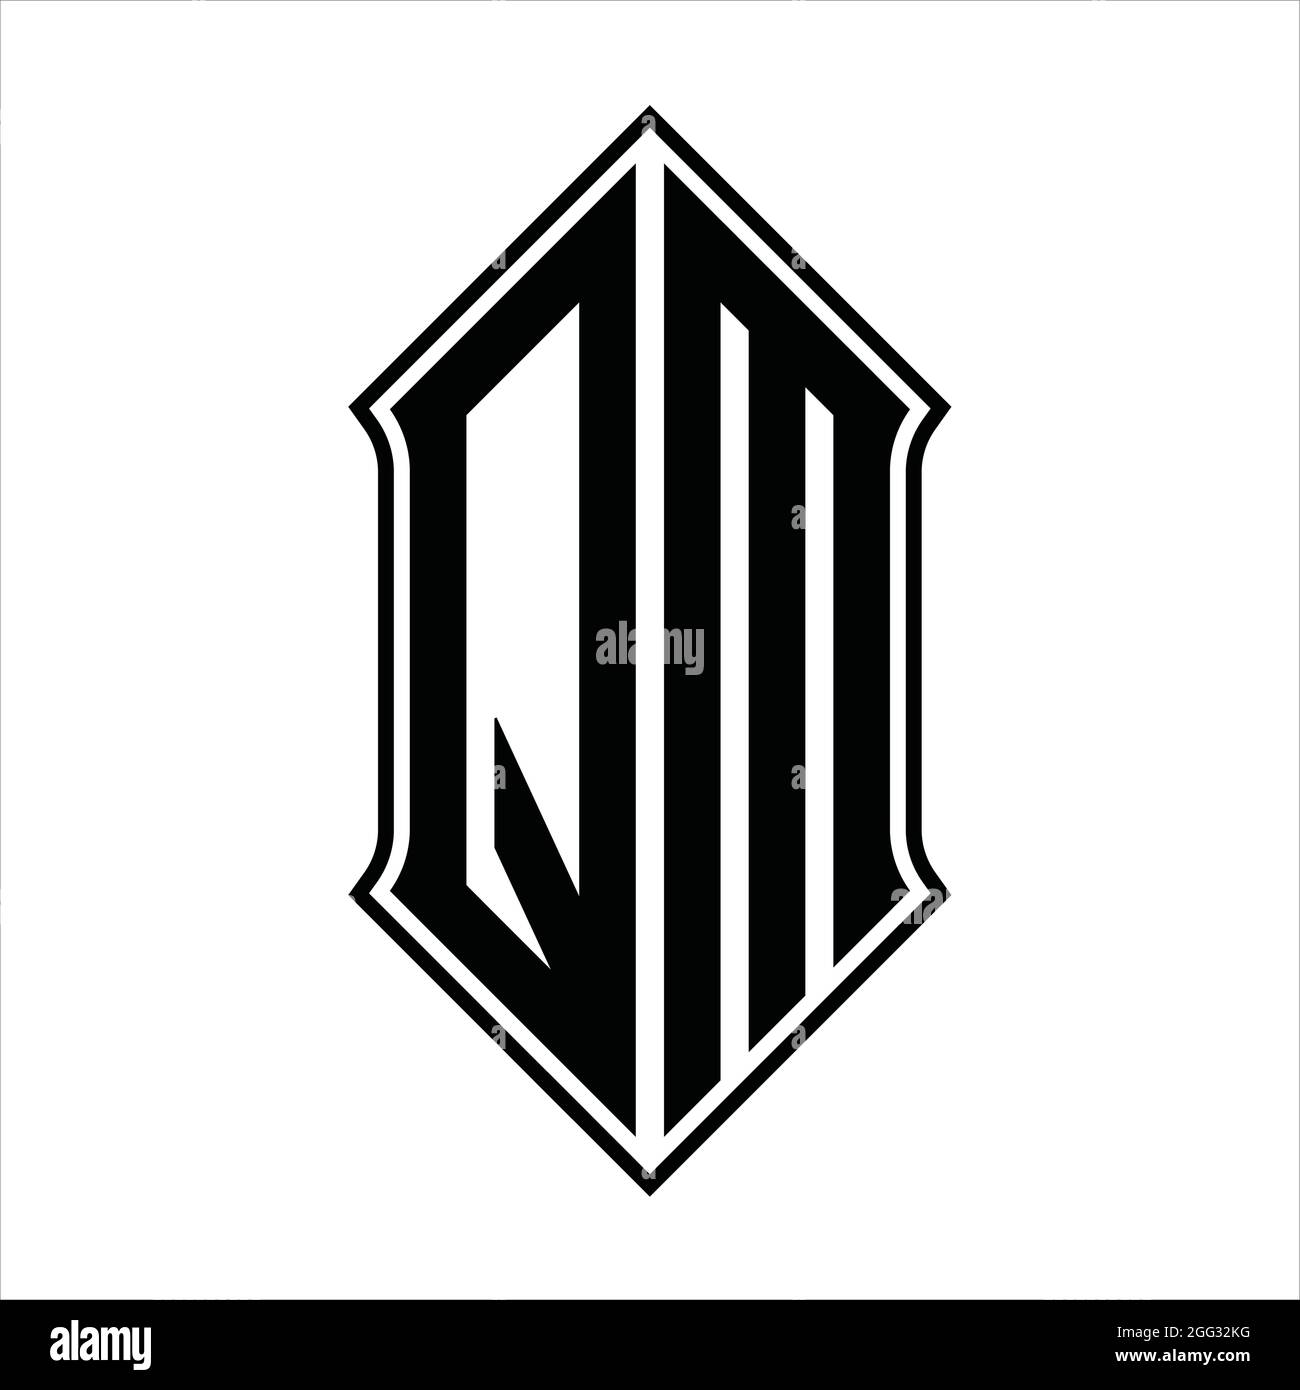 QM Logo monogram with shieldshape and black outline design template ...